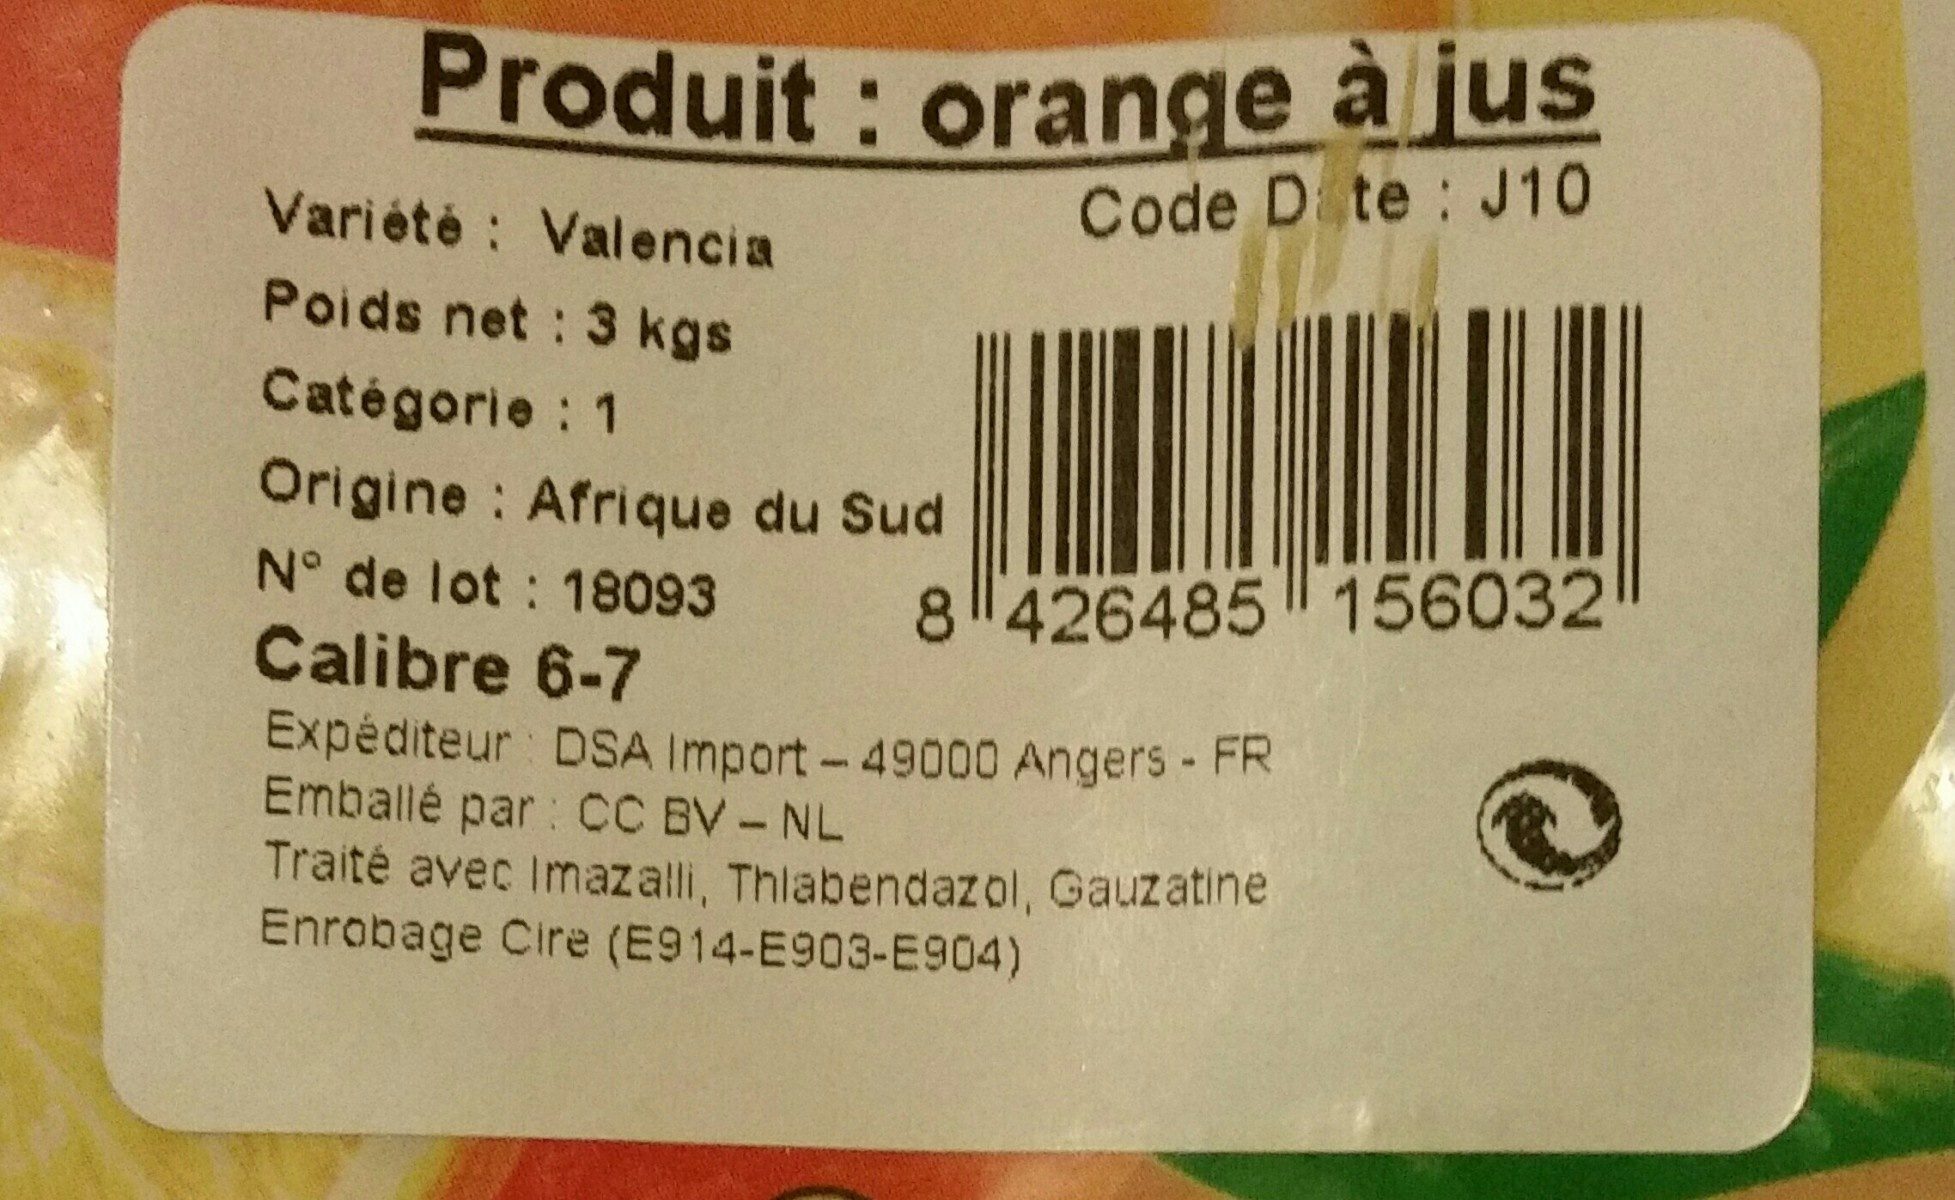 Oranges a jus - Ingrédients